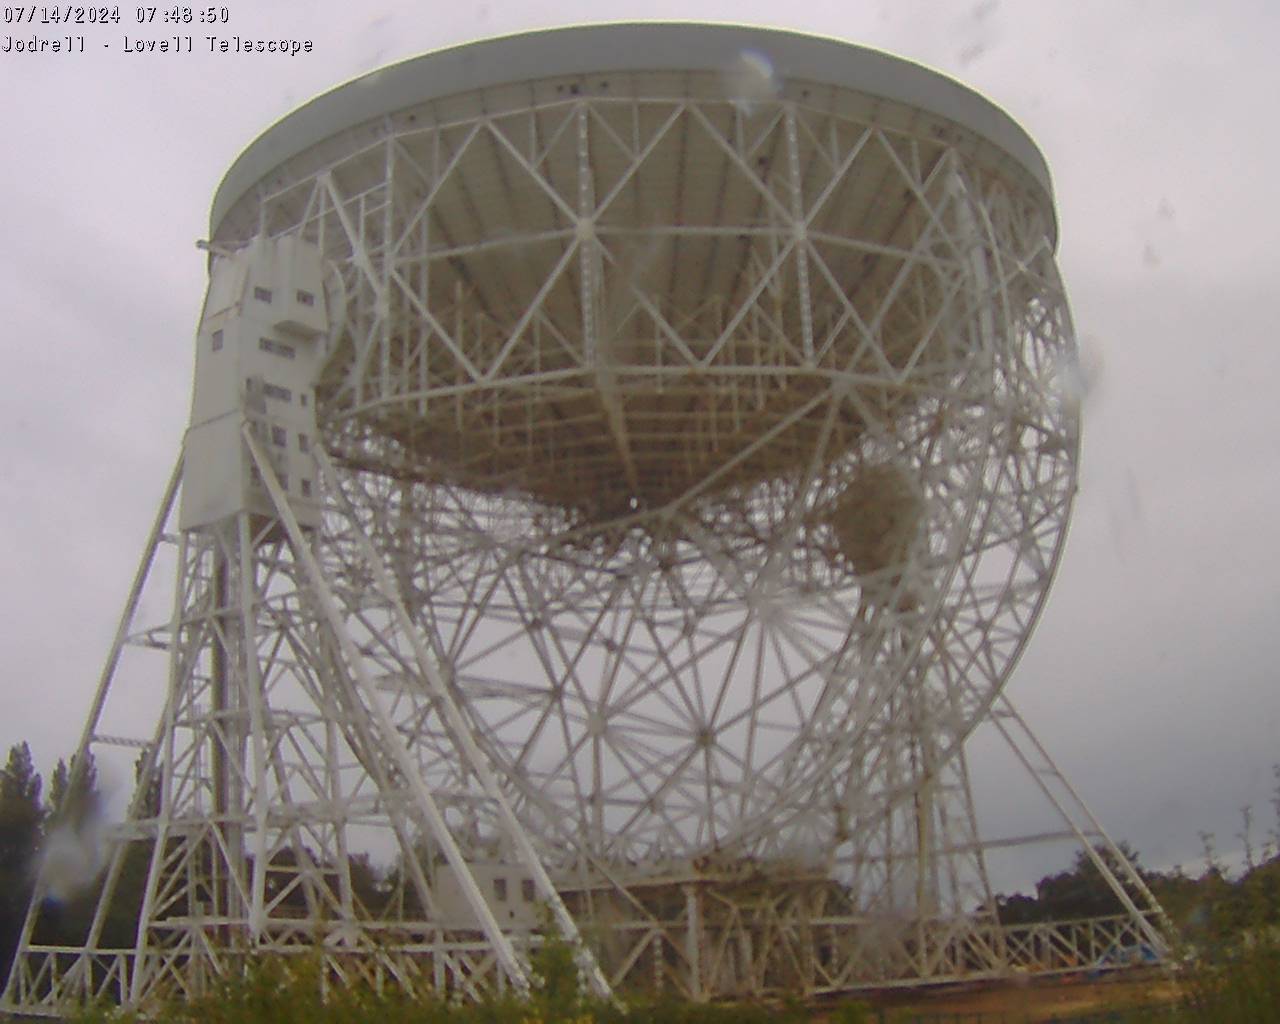 Jodrell Bank Observatory Fr. 07:49